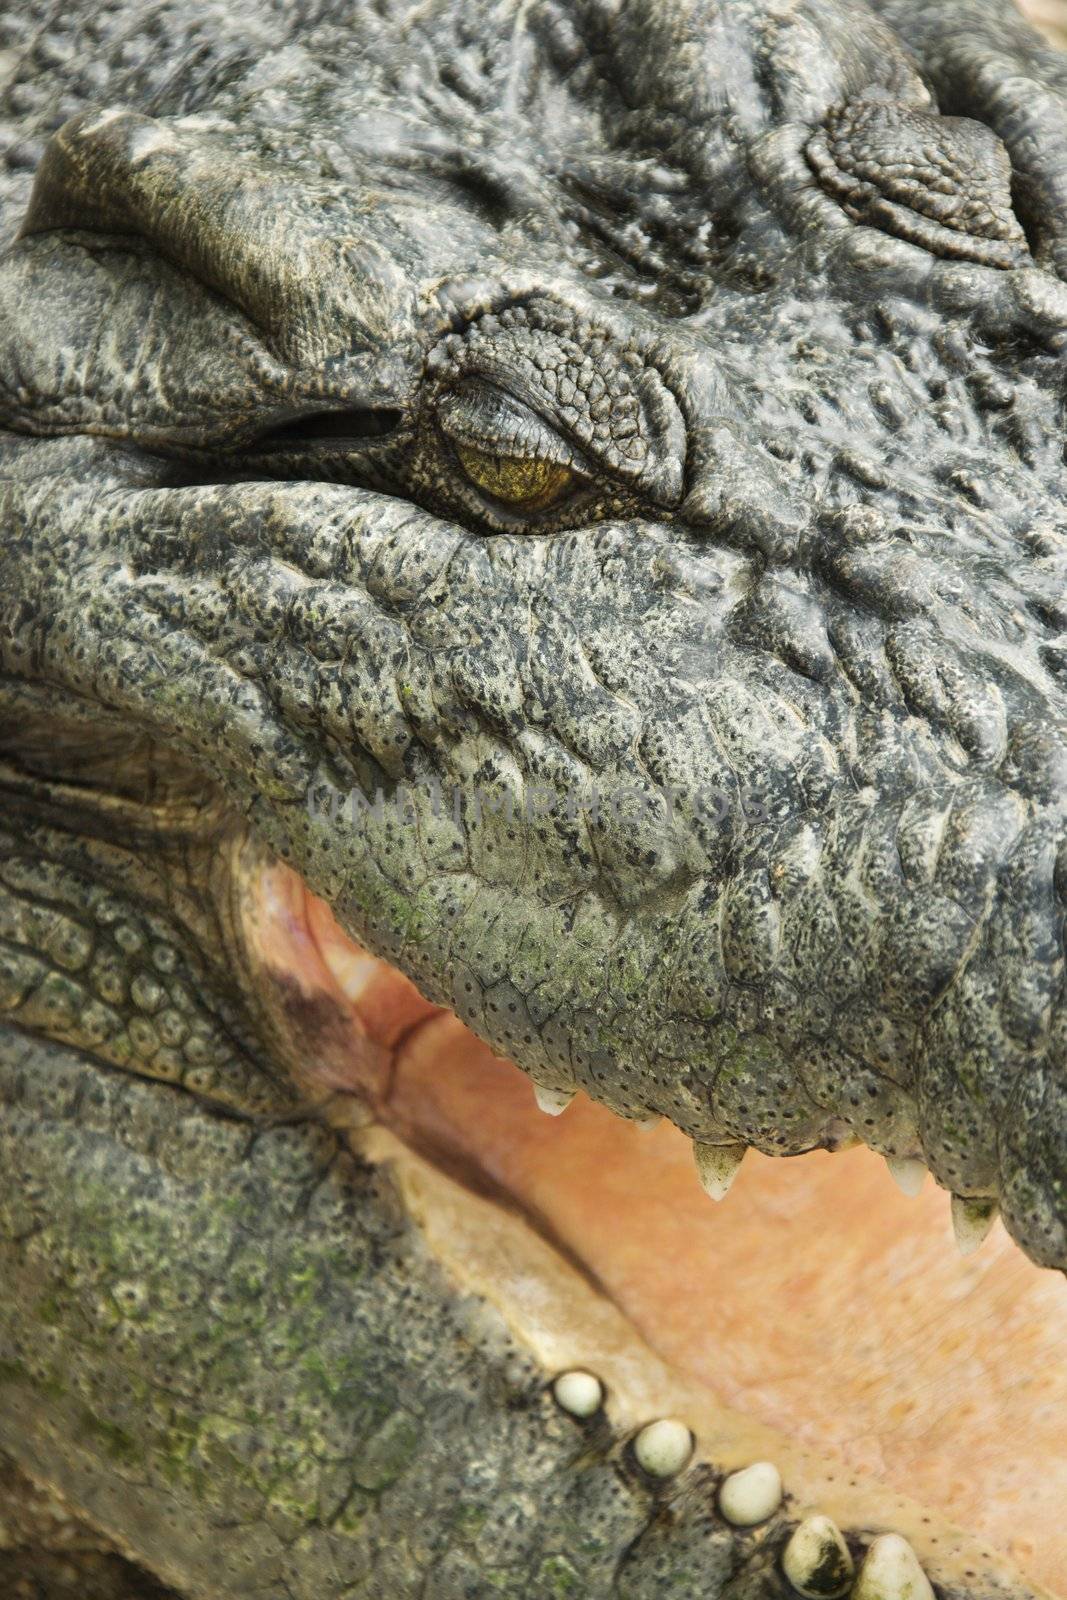 Crocodile close up. by iofoto